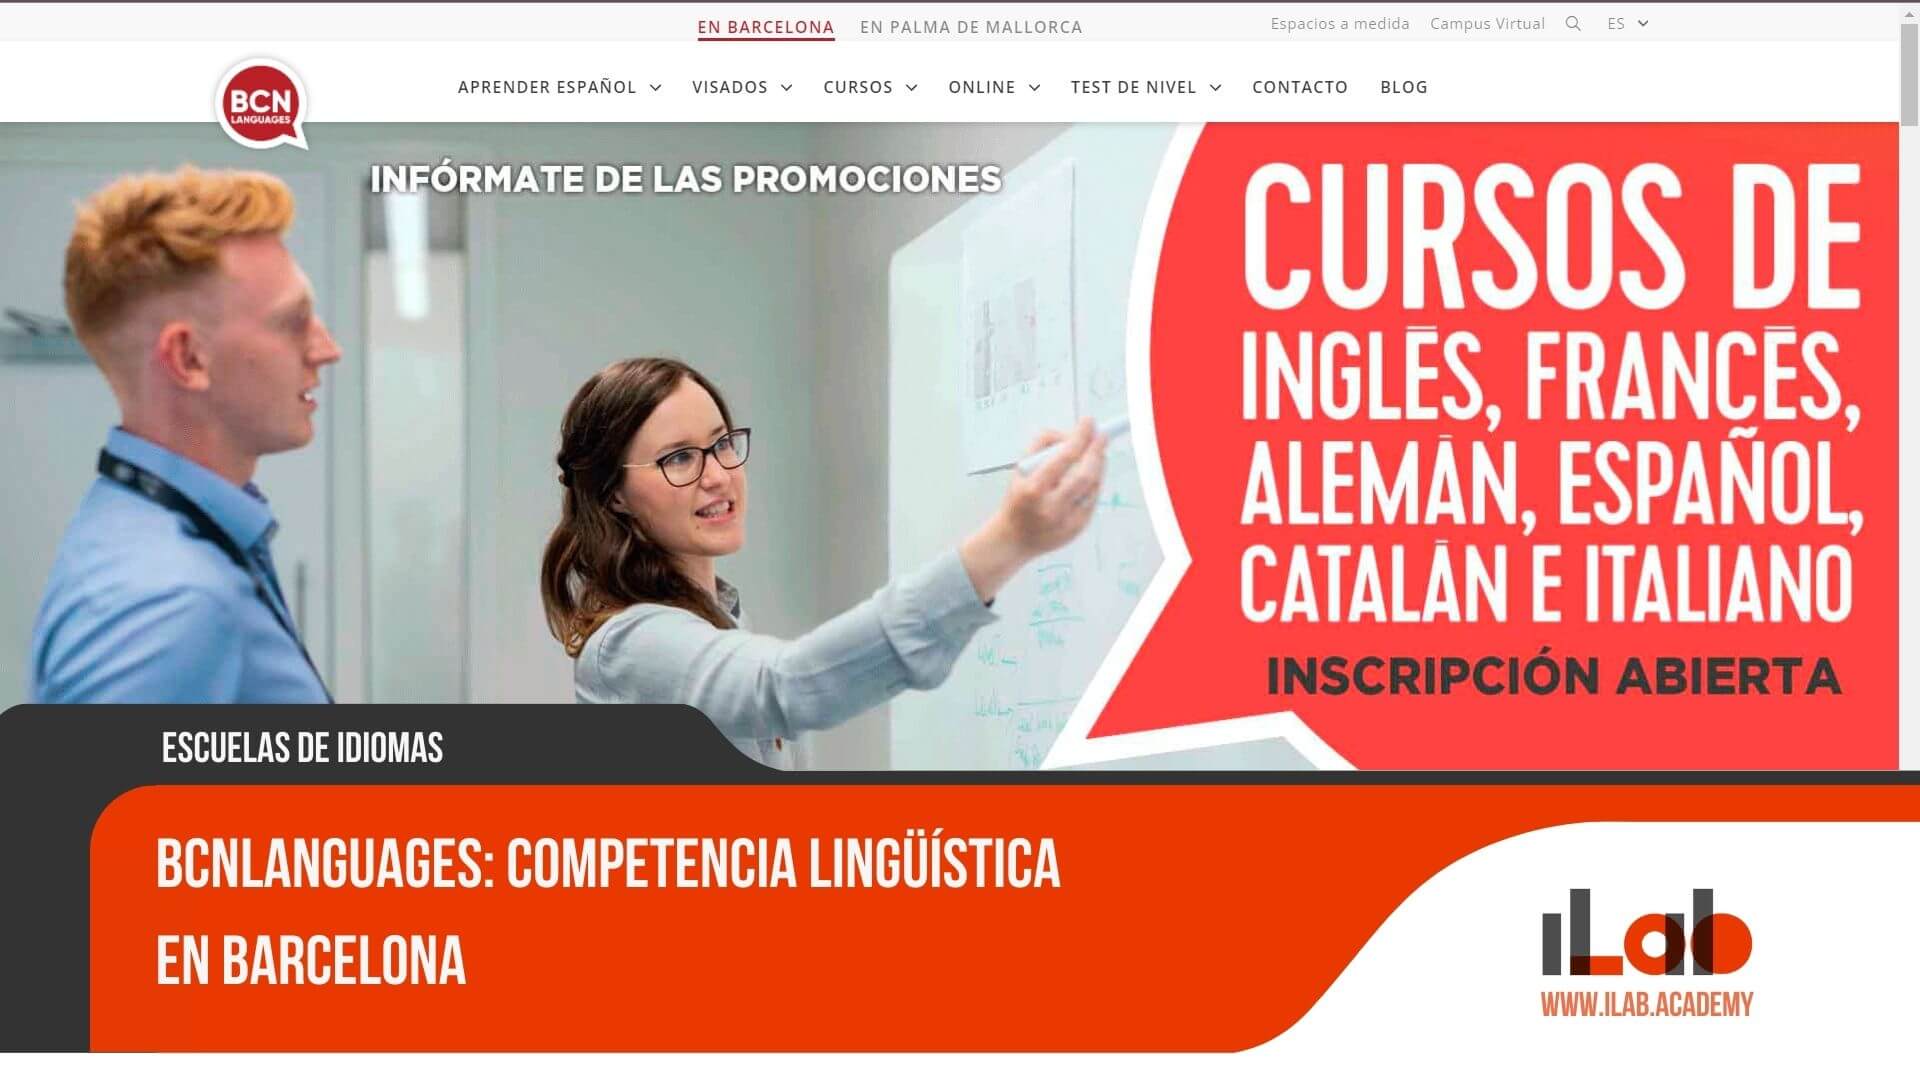 BCNLanguages: Competencia lingüística en Barcelona